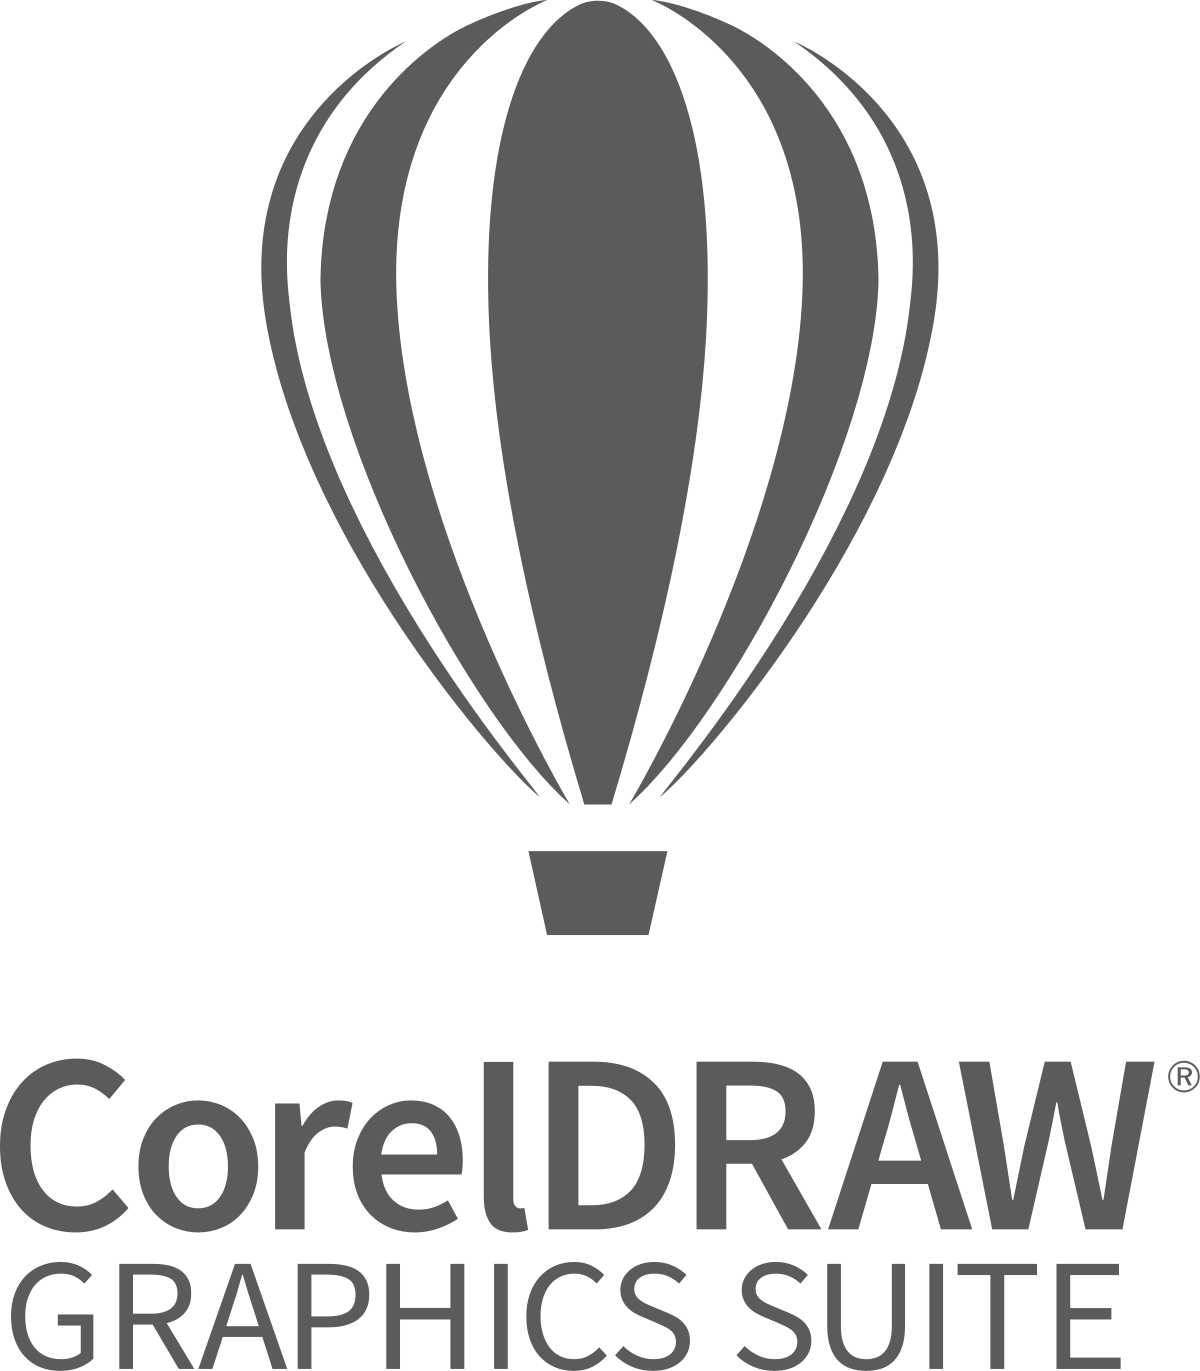 CorelDRAW Graphics Suite 2022 Crack